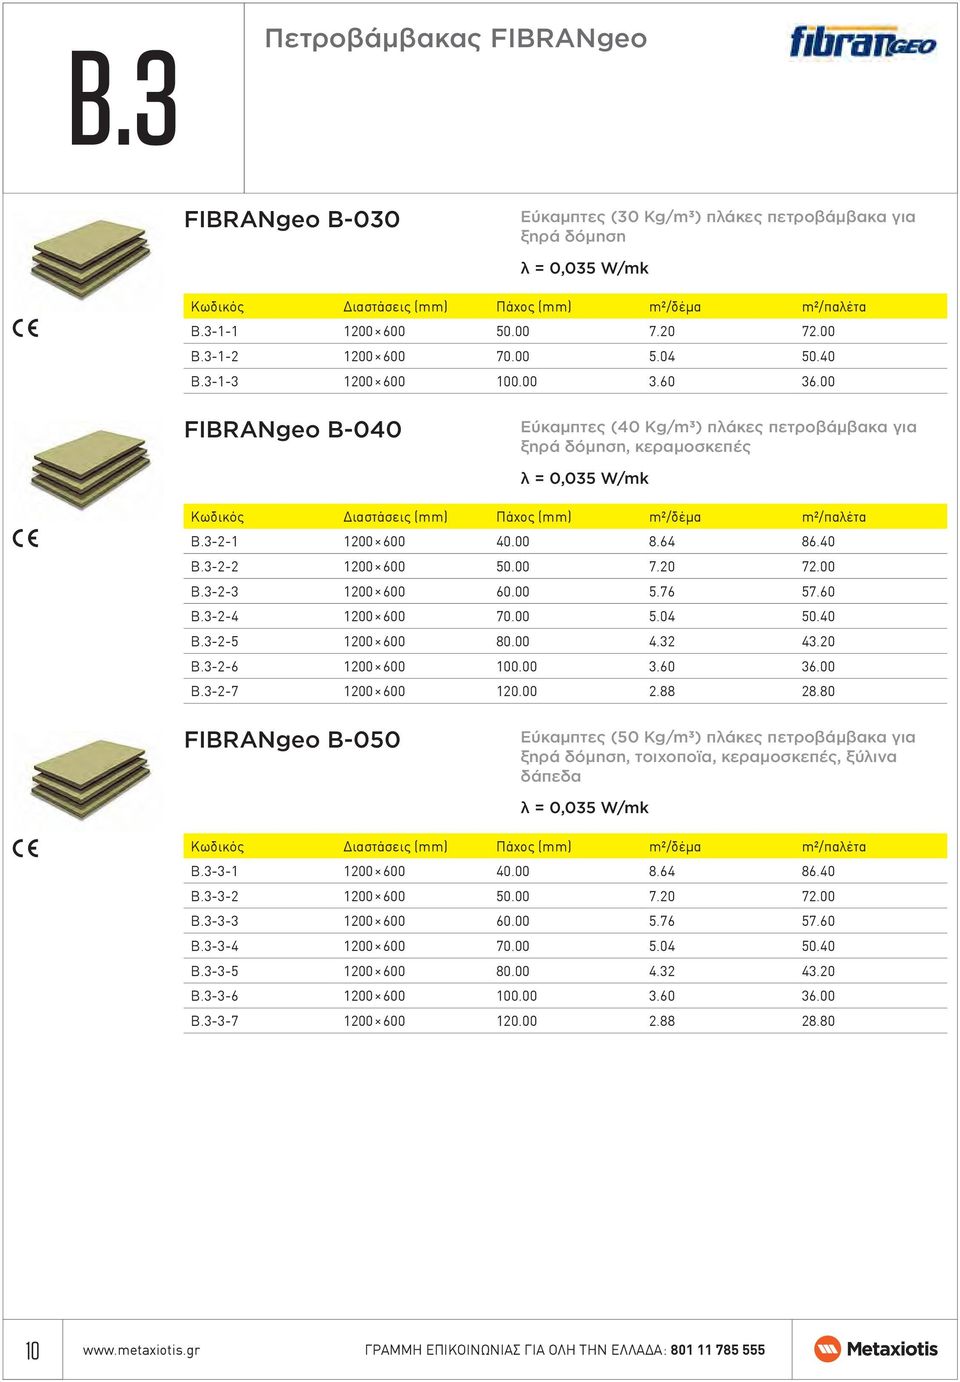 00 FIBRANgeo B-040 Εύκαμπτες (40 Kg/m³) πλάκες πετροβάμβακα για ξηρά δόμηση, κεραμοσκεπές λ = 0,035 W/mk Διαστάσεις (mm) Πάχος (mm) m²/δέμα m²/παλέτα B.3-2-1 1200 600 40.00 8.64 86.40 B.